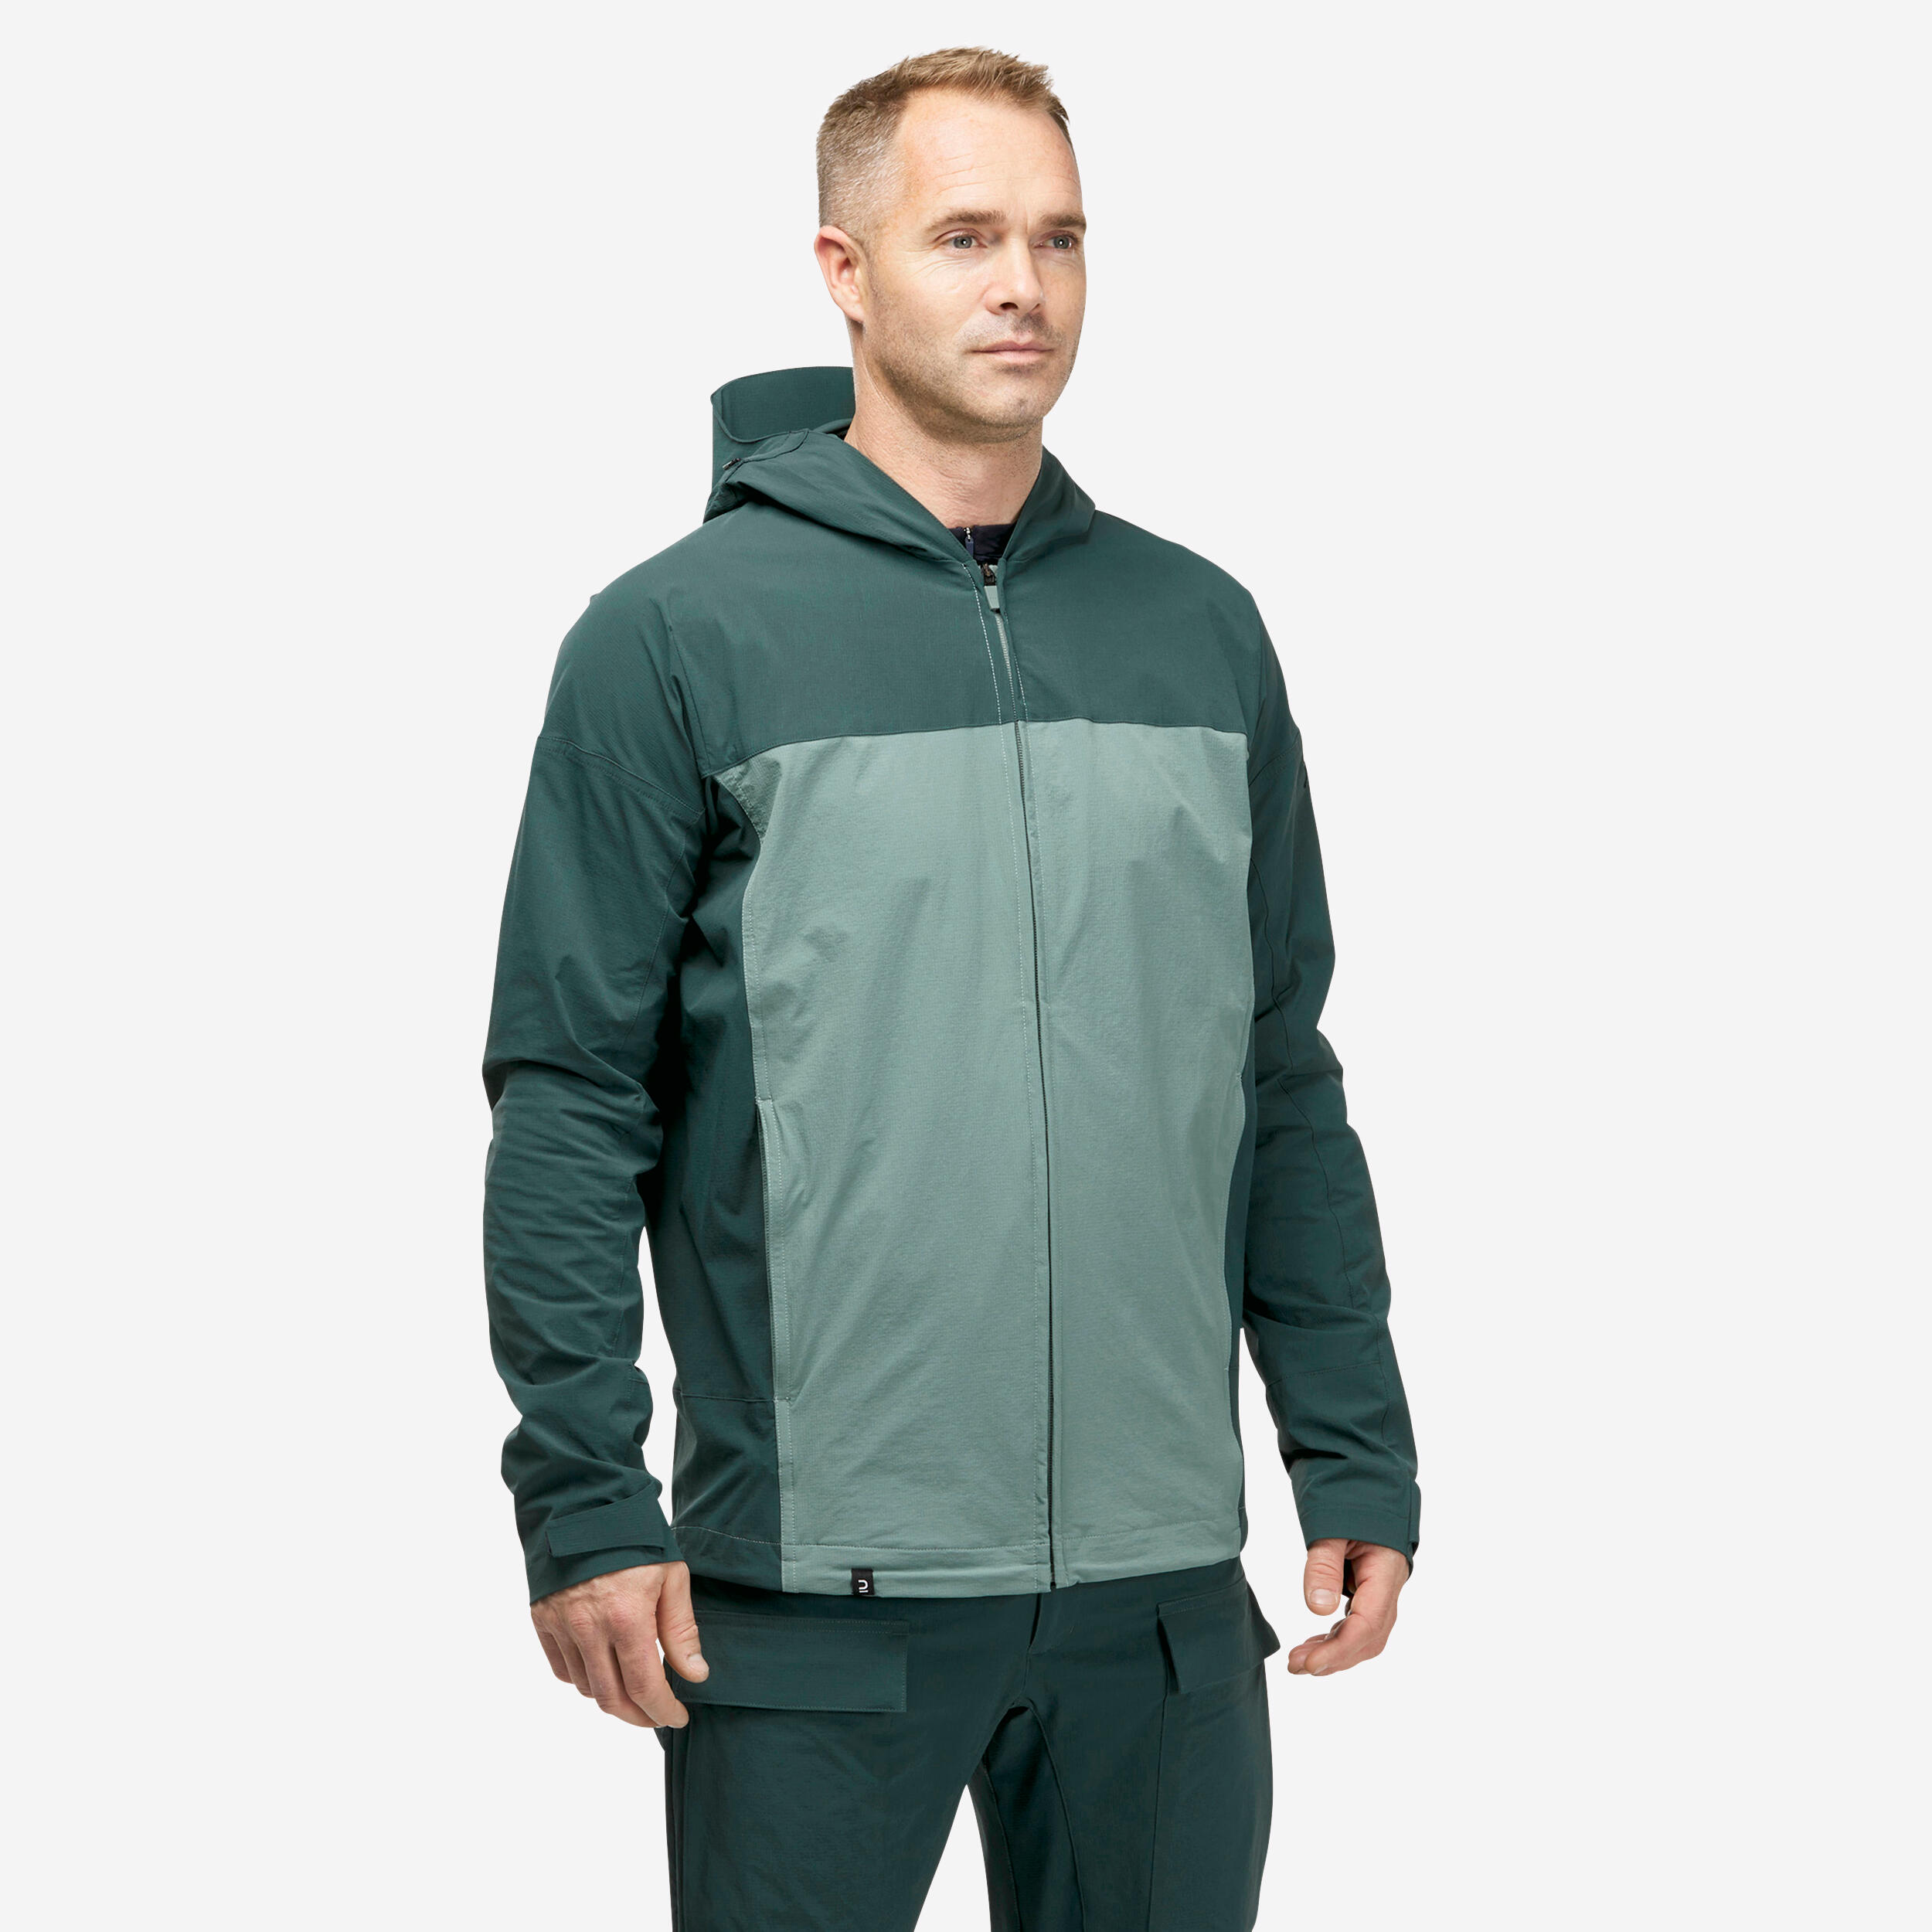 FORCLAZ Unisex anti-mosquito jacket - Tropic 900 - Green